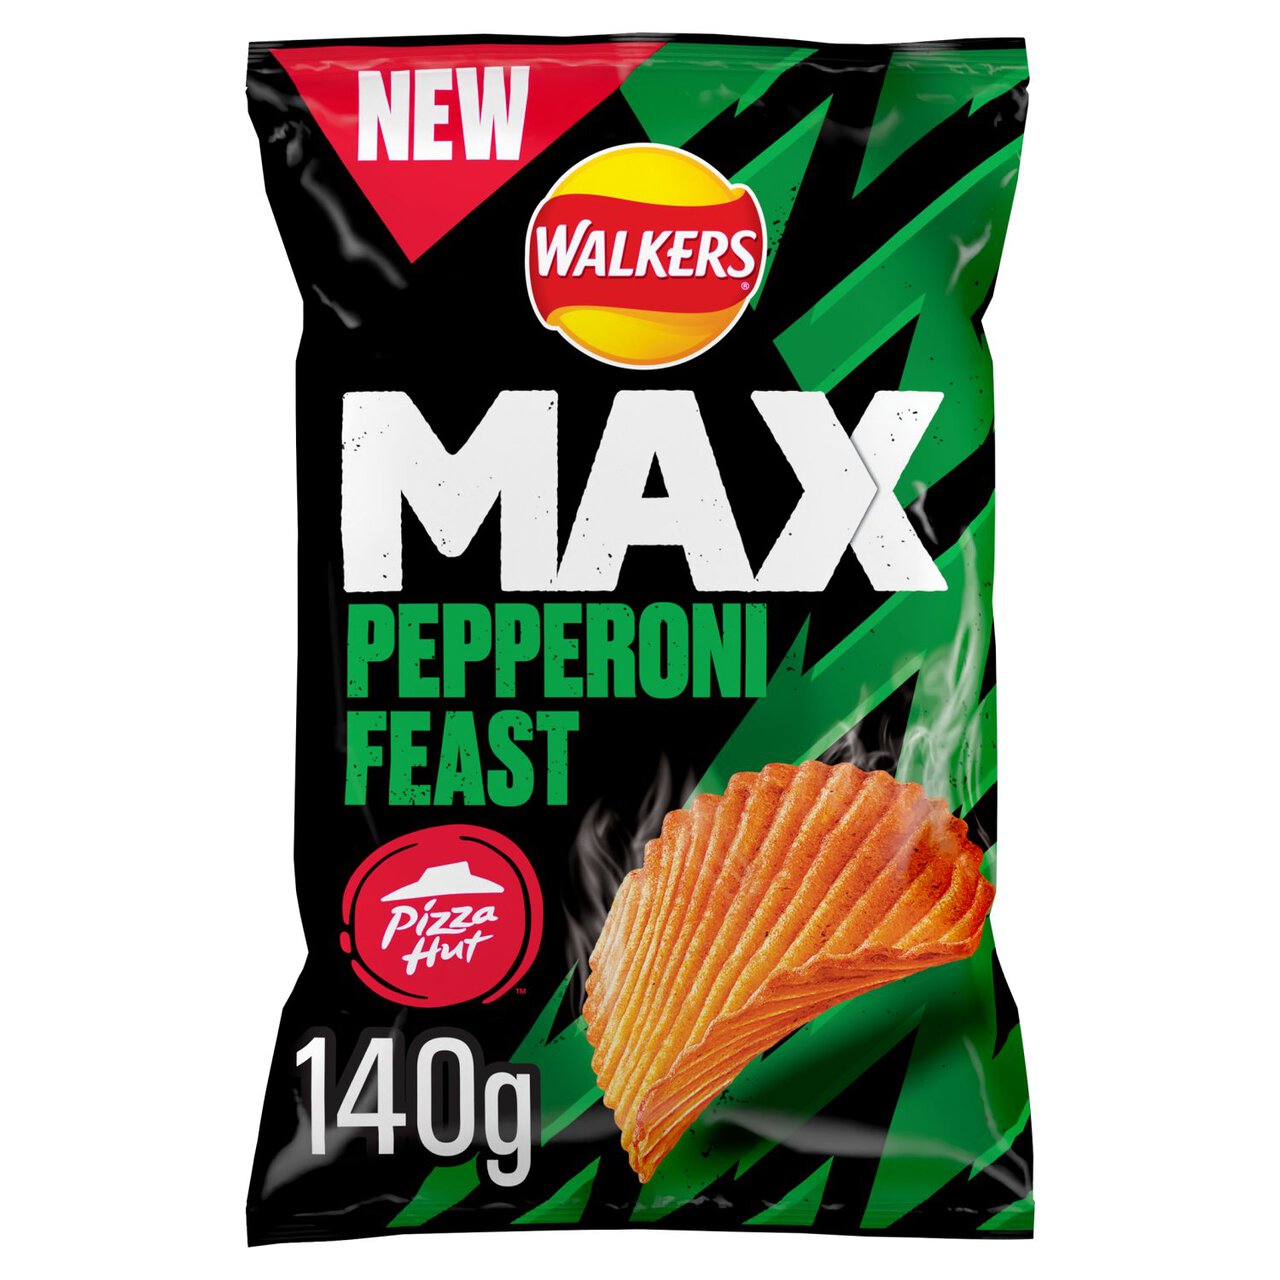 Walkers Max Pizza Hut Pepperoni Feast Sharing Crisps 140g